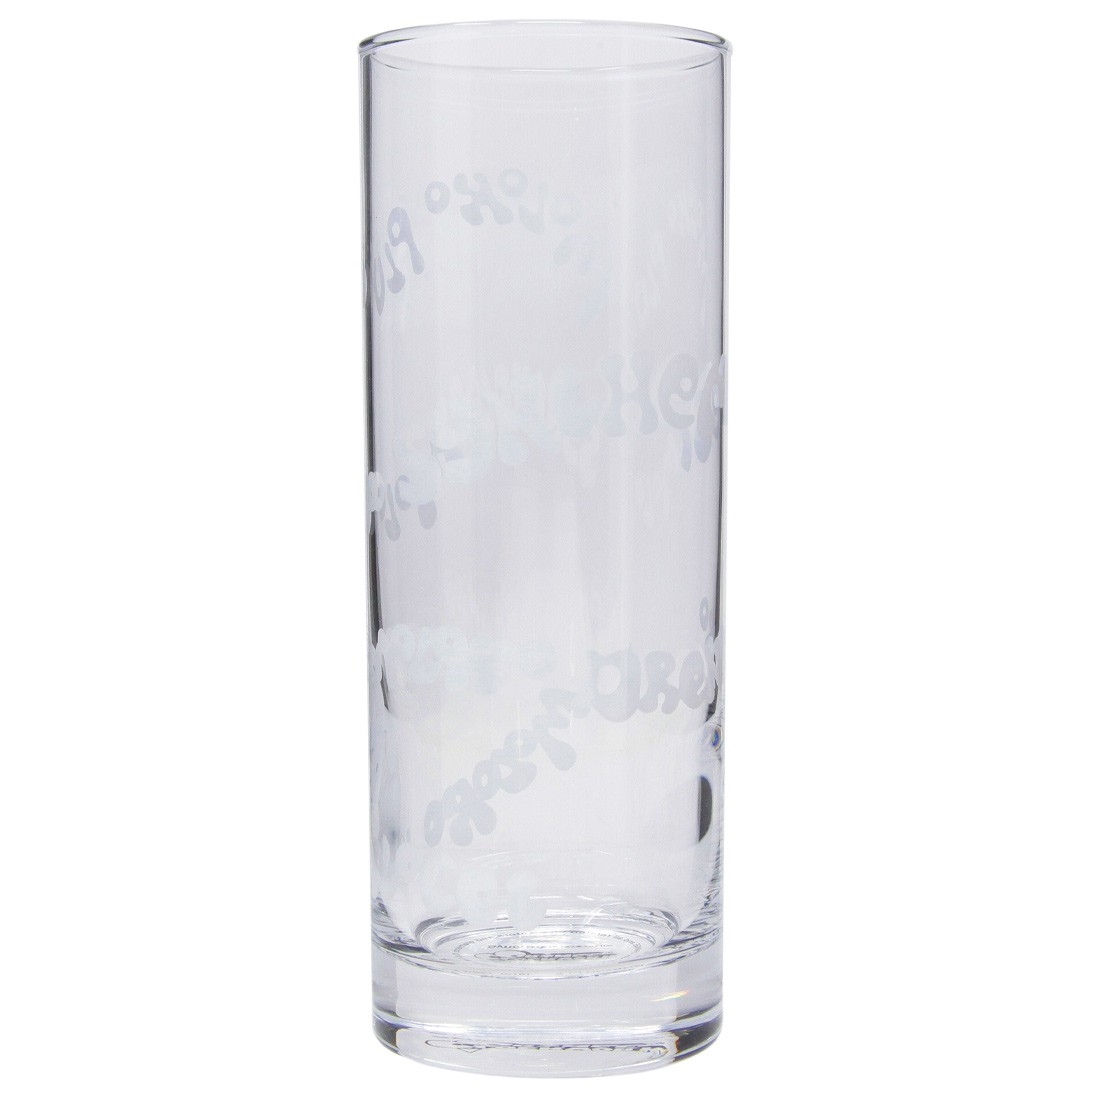 Medicom x SYNC A Clockwork Orange Milk Glass (white)